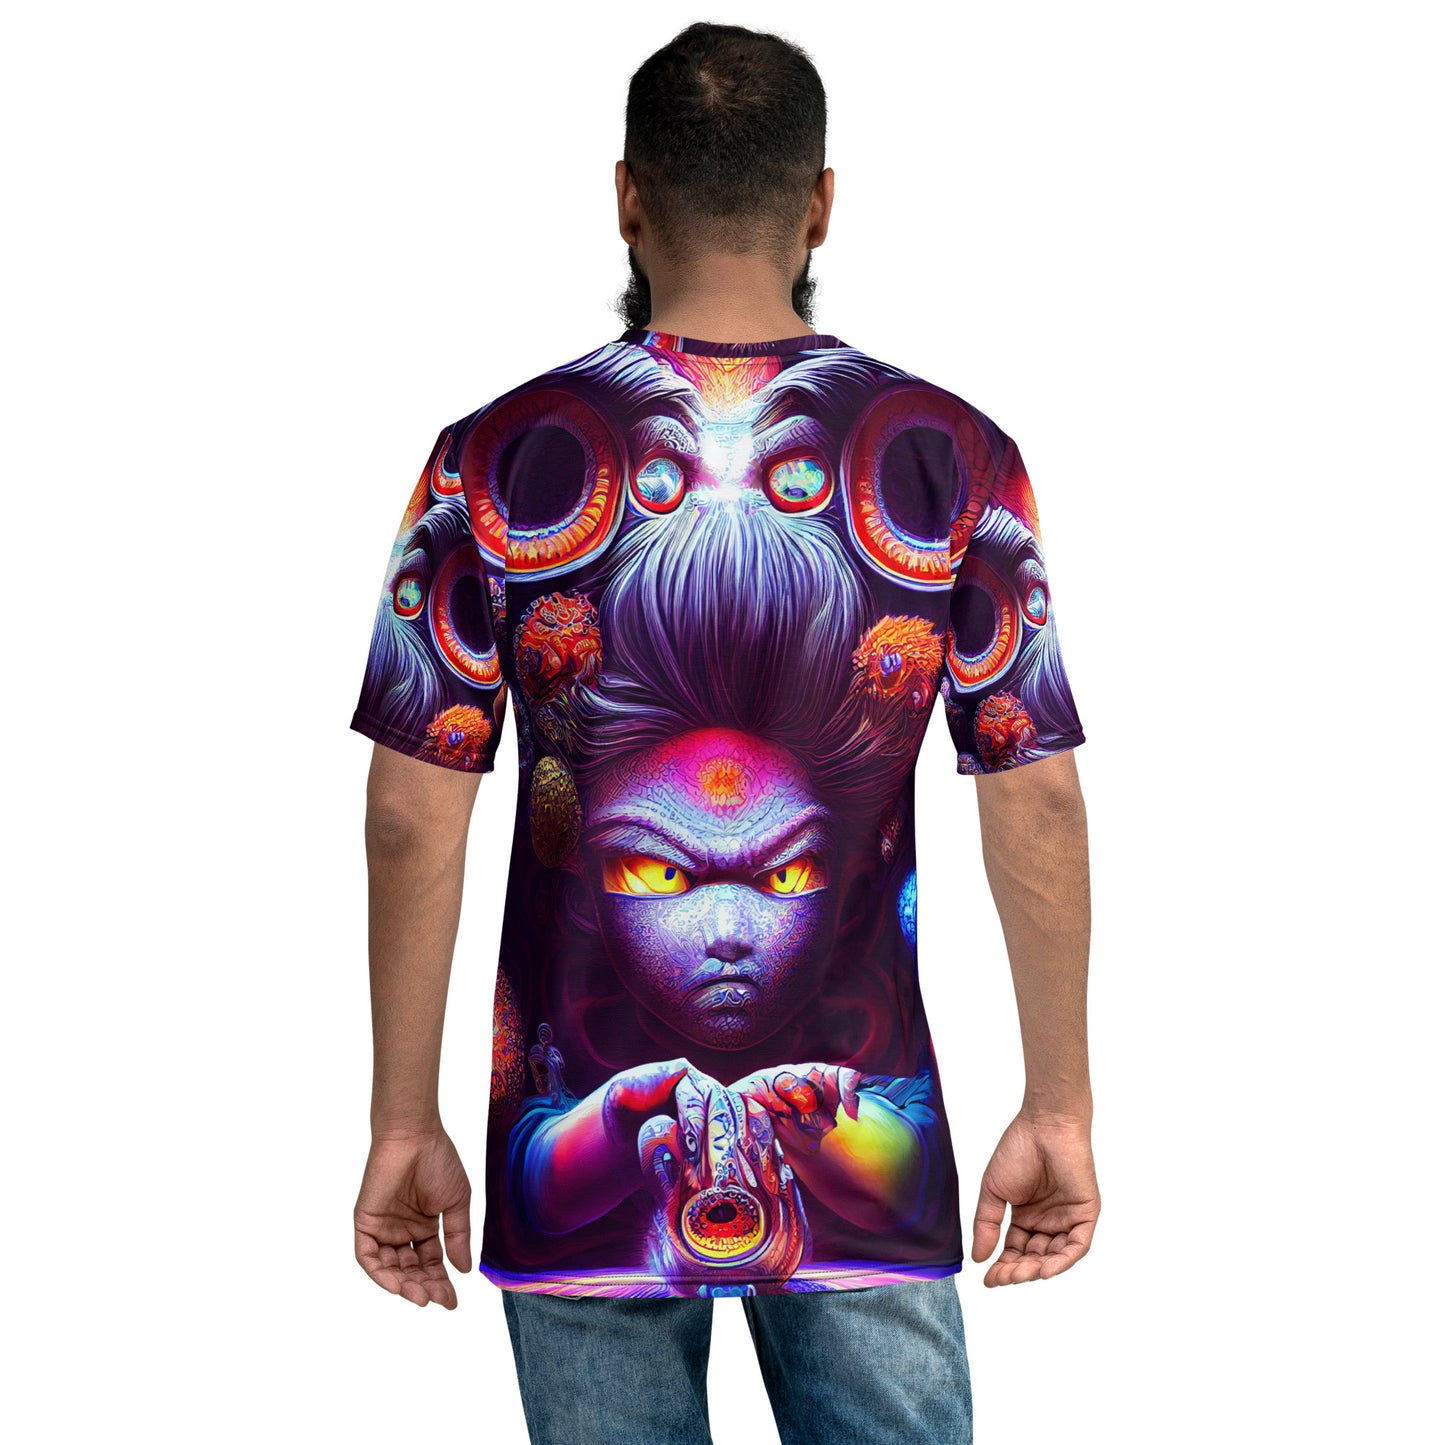 Super Saiyan in Wonderland 1.0 Men's t-shirt